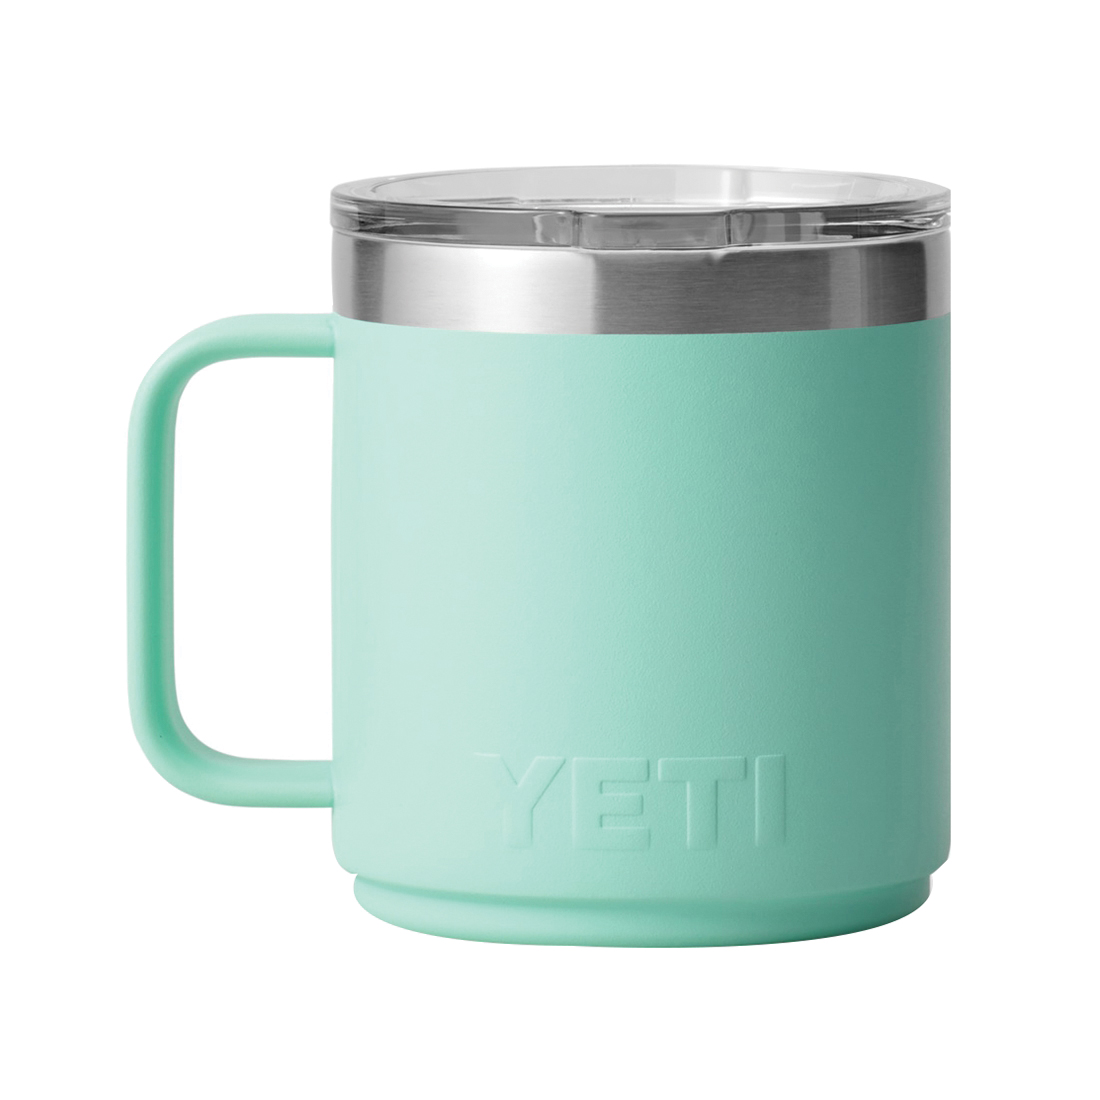 Yeti Rambler 14oz Stackable Mug with Magslider Lid - White